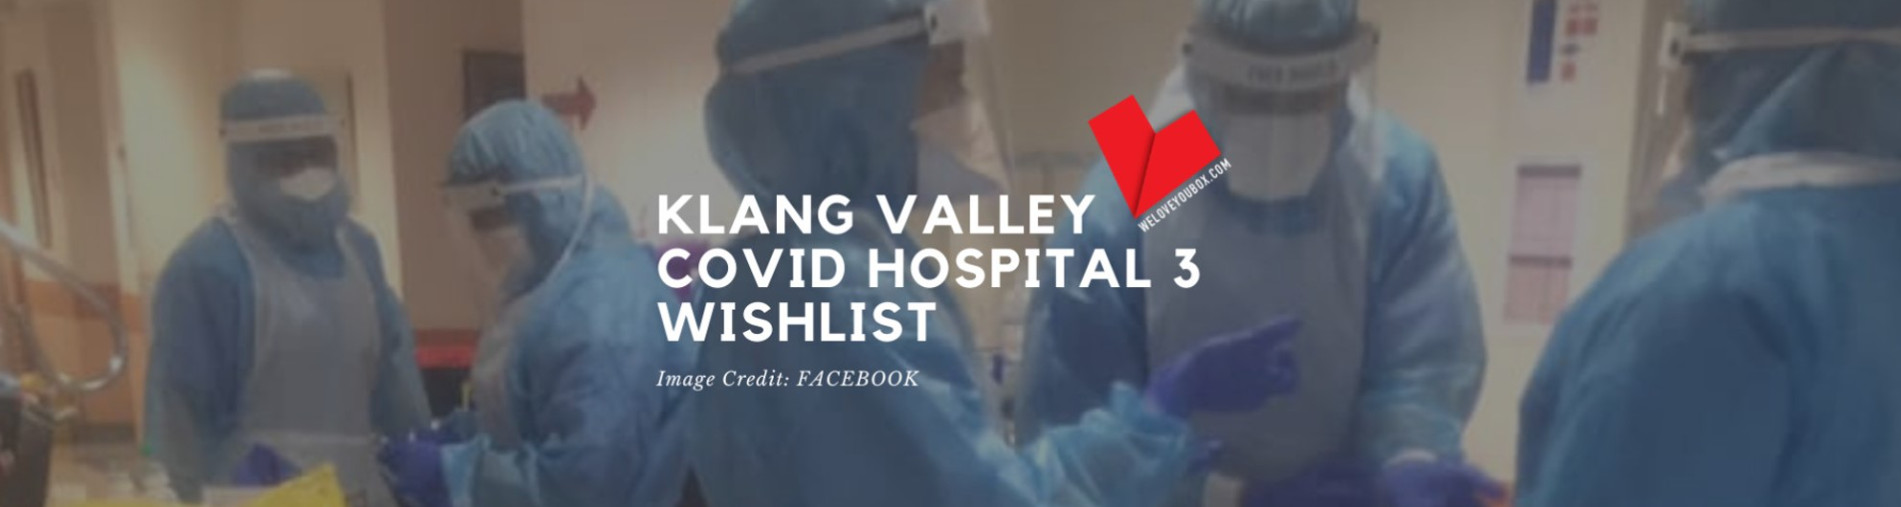 Klang Valley Covid Hospital 3 Wishlist